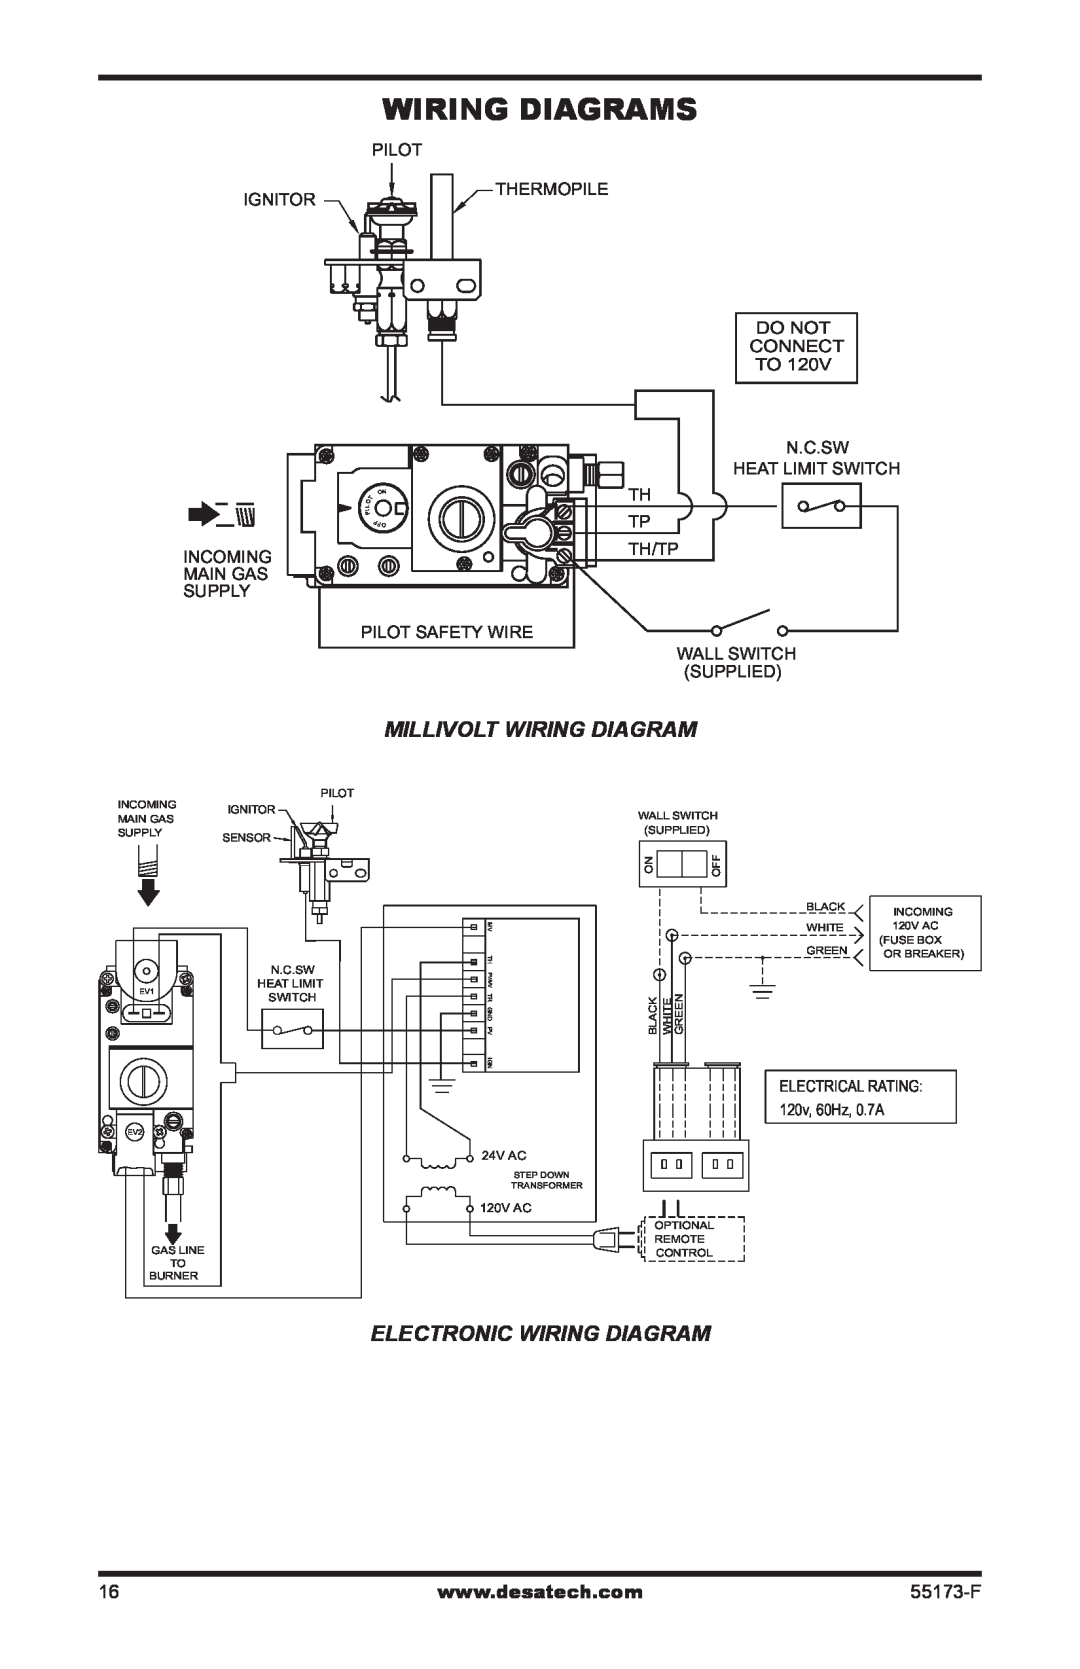 Desa GL36STP Wiring Diagrams, Millivolt Wiring Diagram, Electronic Wiring Diagram, Pilot Ignitor Thermopile, 55173-F 